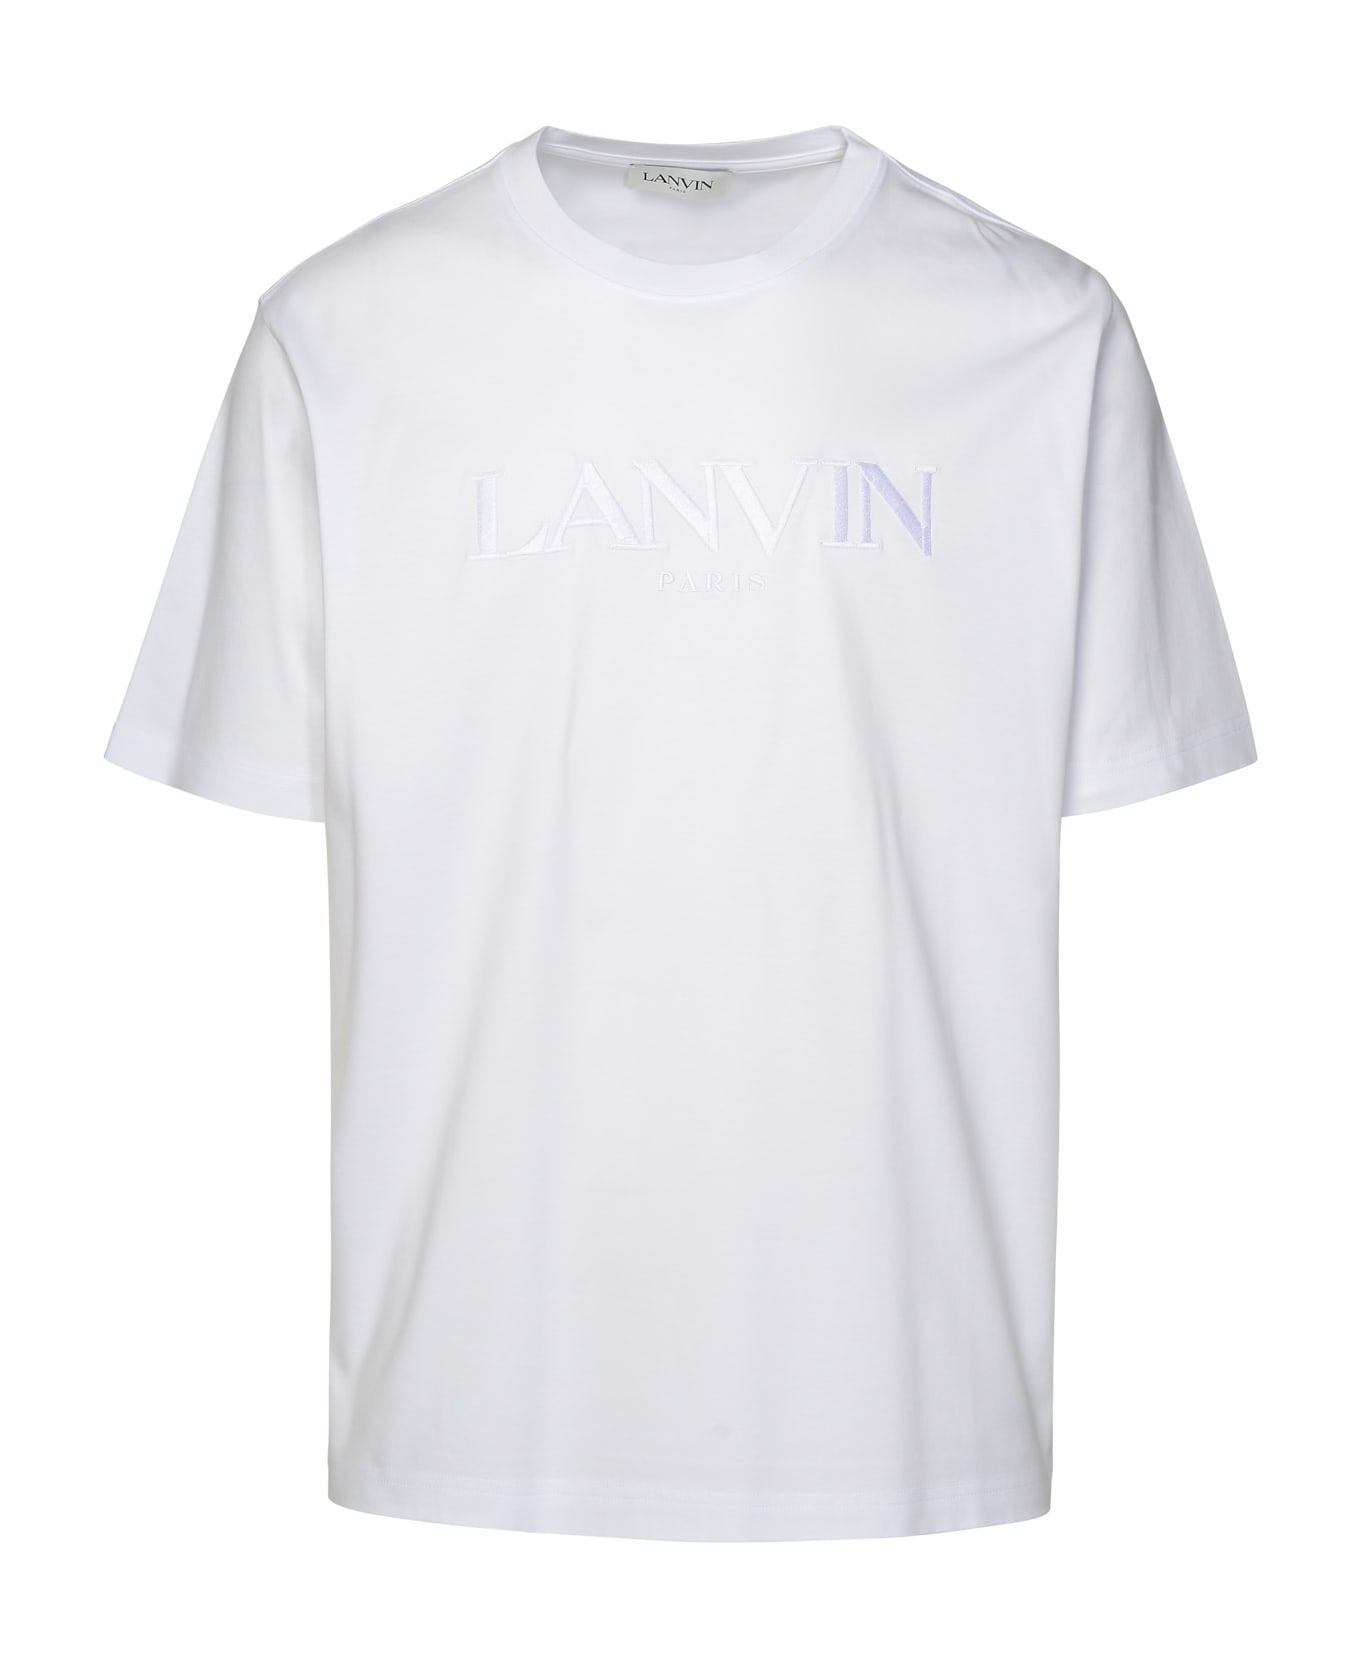 Lanvin White Cotton T-shirt - Optic white